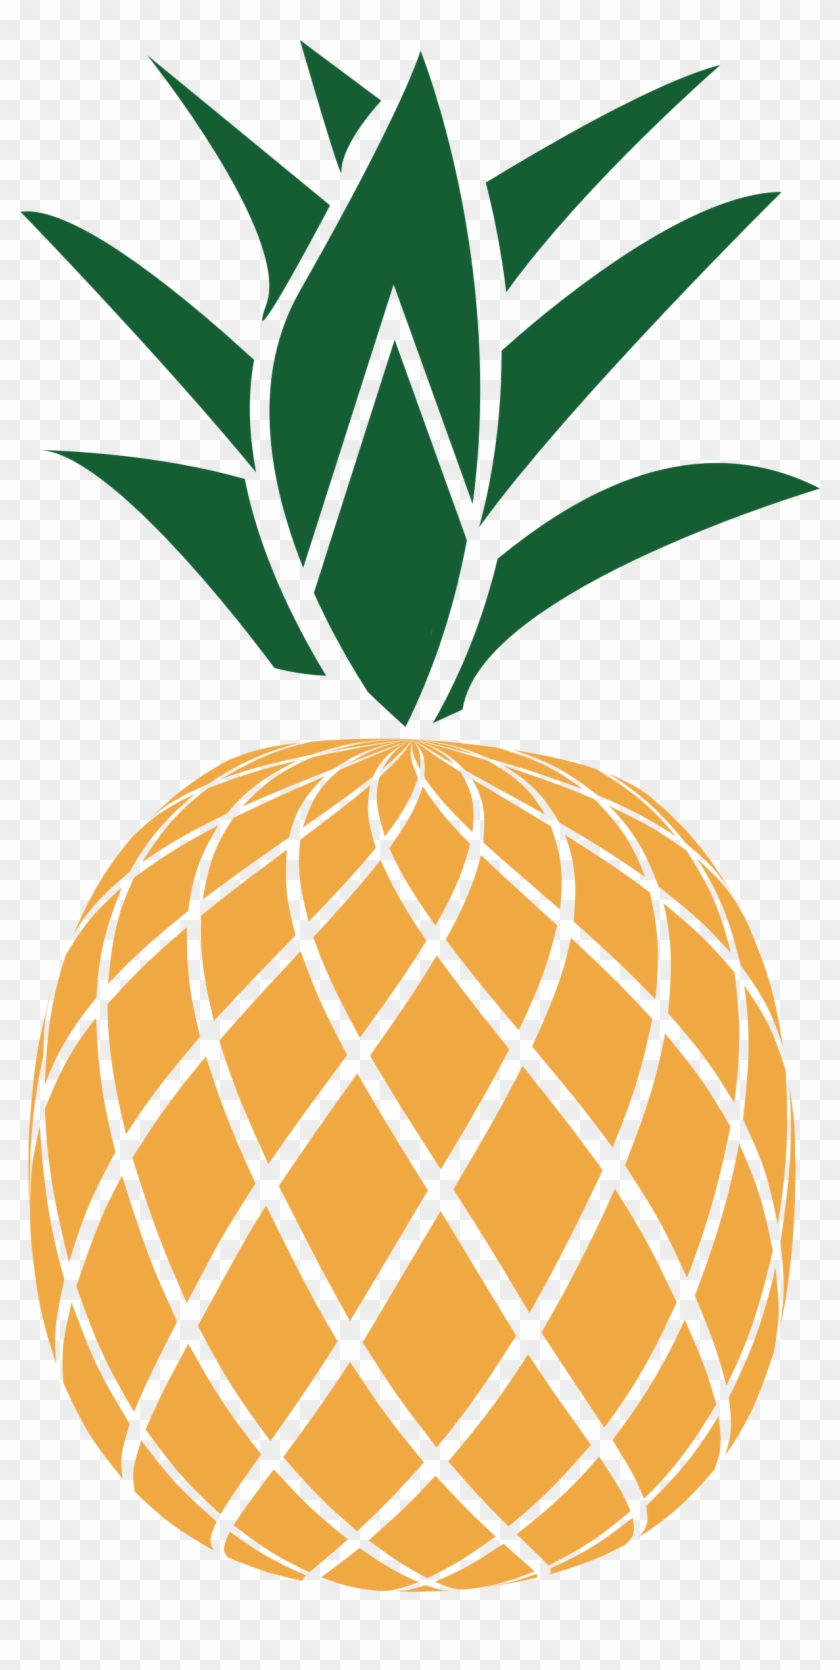 Big Image - Pineapple Knit Svg #385367